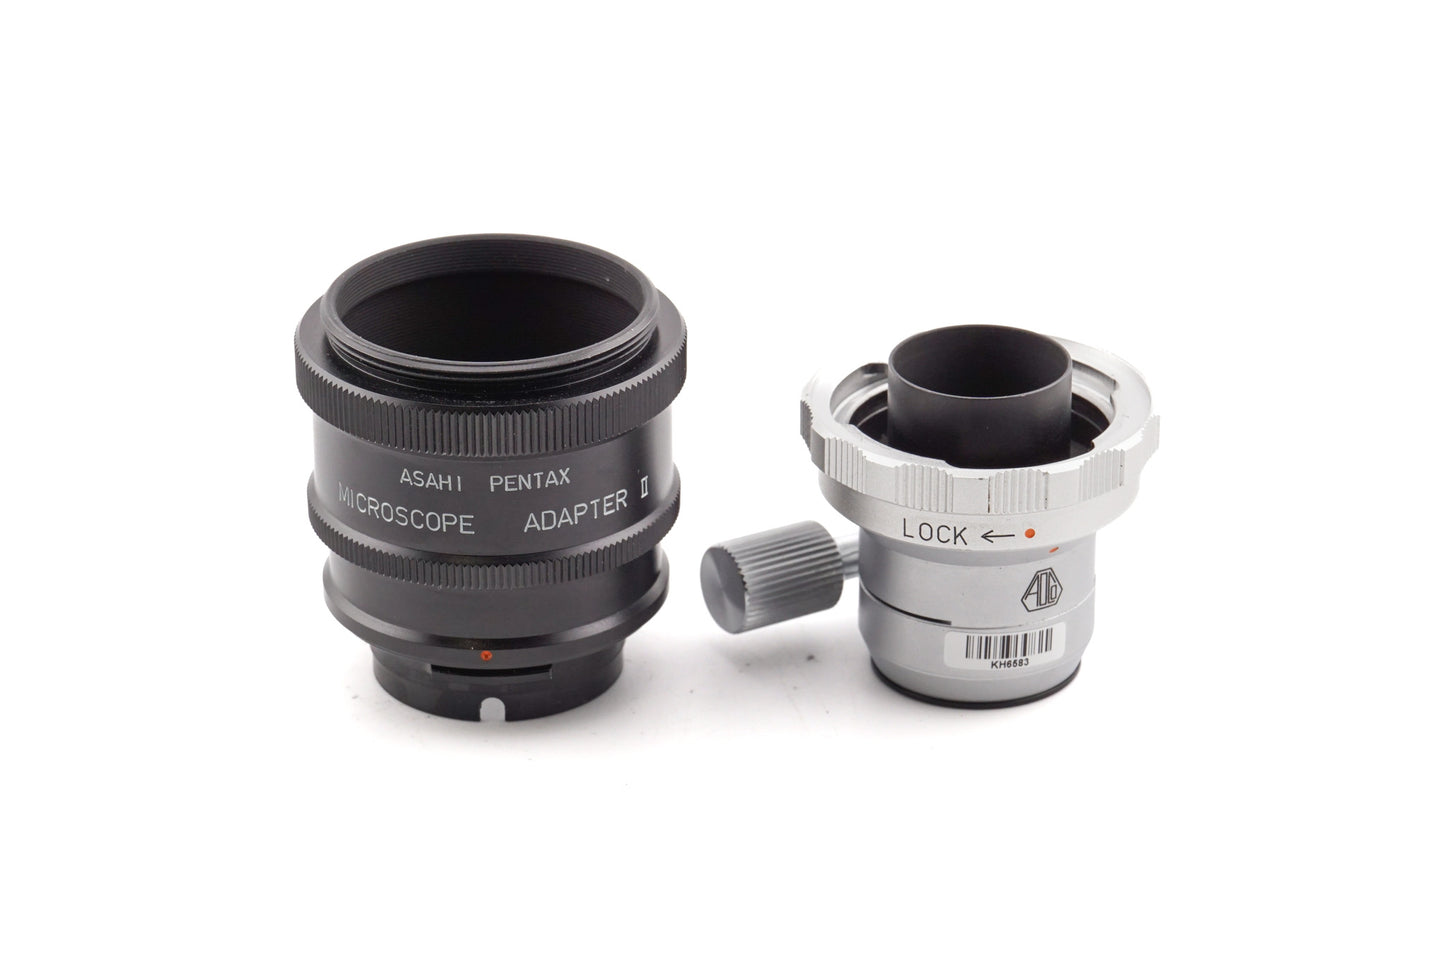 Pentax Microscope Adapter II - Lens Adapter